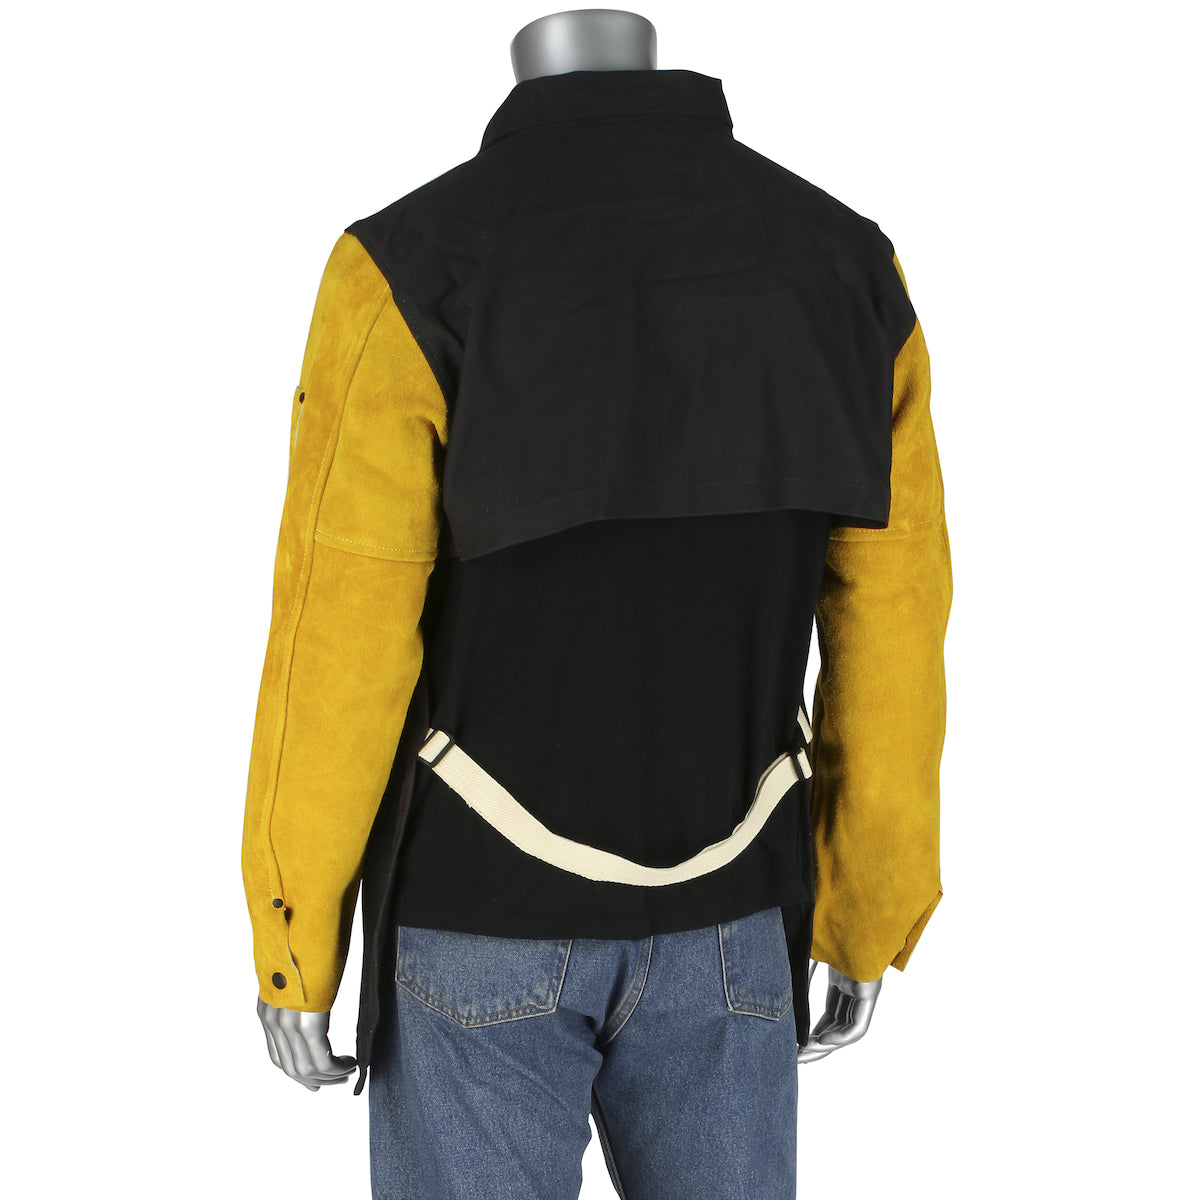 Ironcat 8051/L Combination FR Cotton / Leather Cape Sleeve with Apron